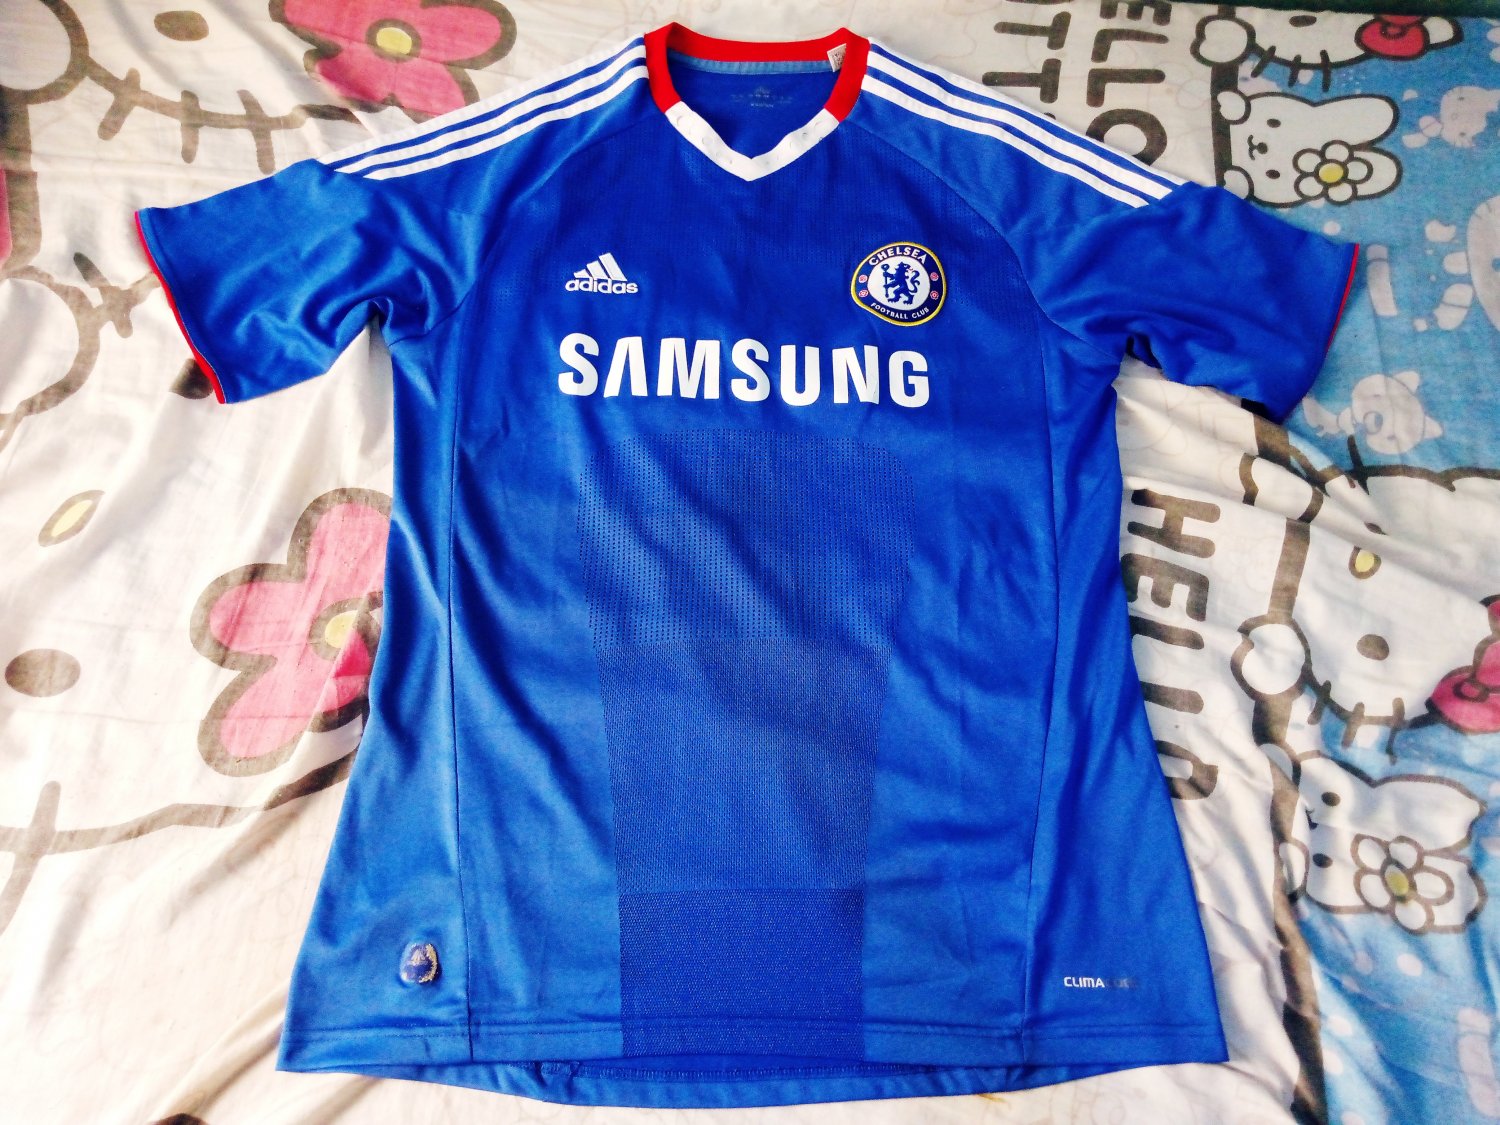 Chelsea Home football shirt 2010 - 2011. Sponsored by Samsung